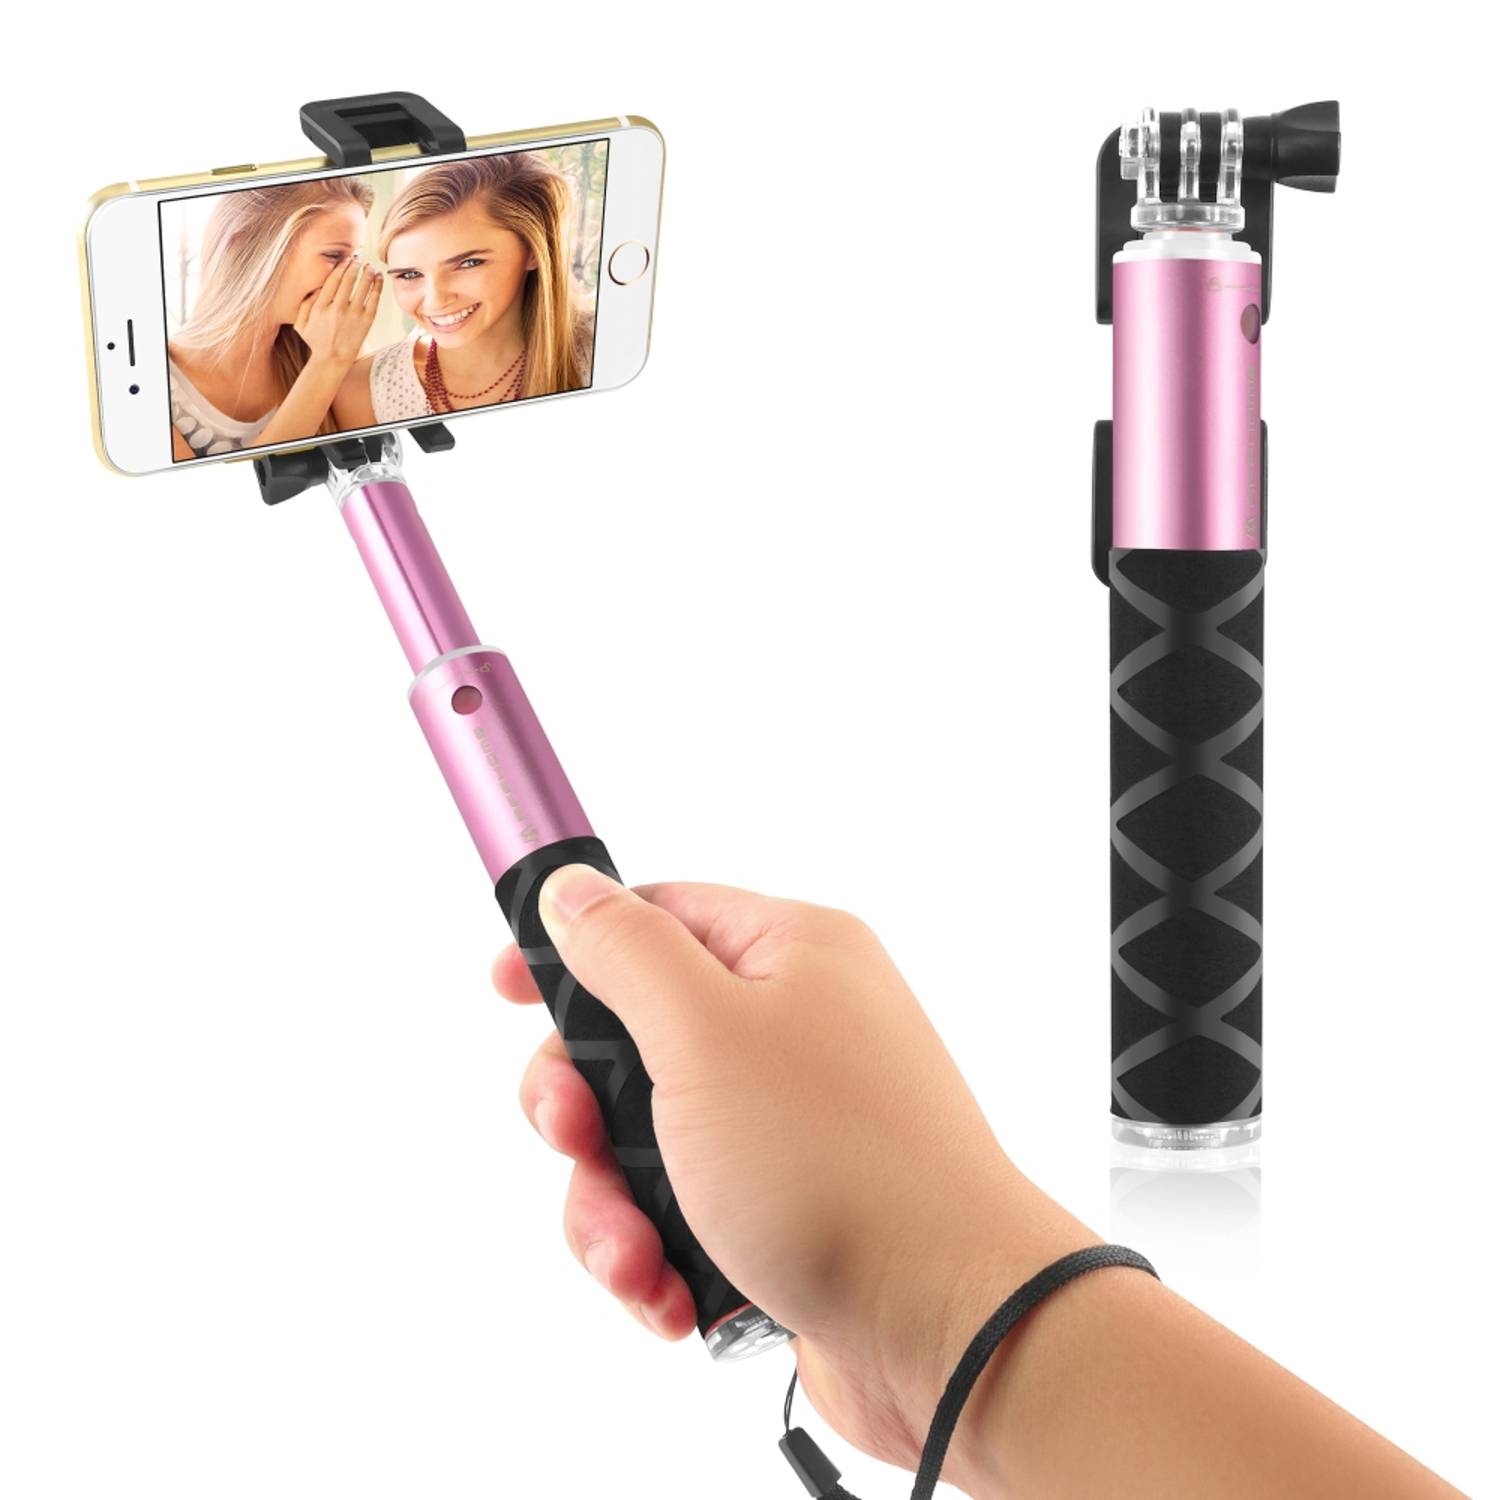 Insten Lightweight Pocket-Size Extendable Handheld Selfie Stick for iPhone Samsung Gopro & More Smartphones\/Cameras, Pink